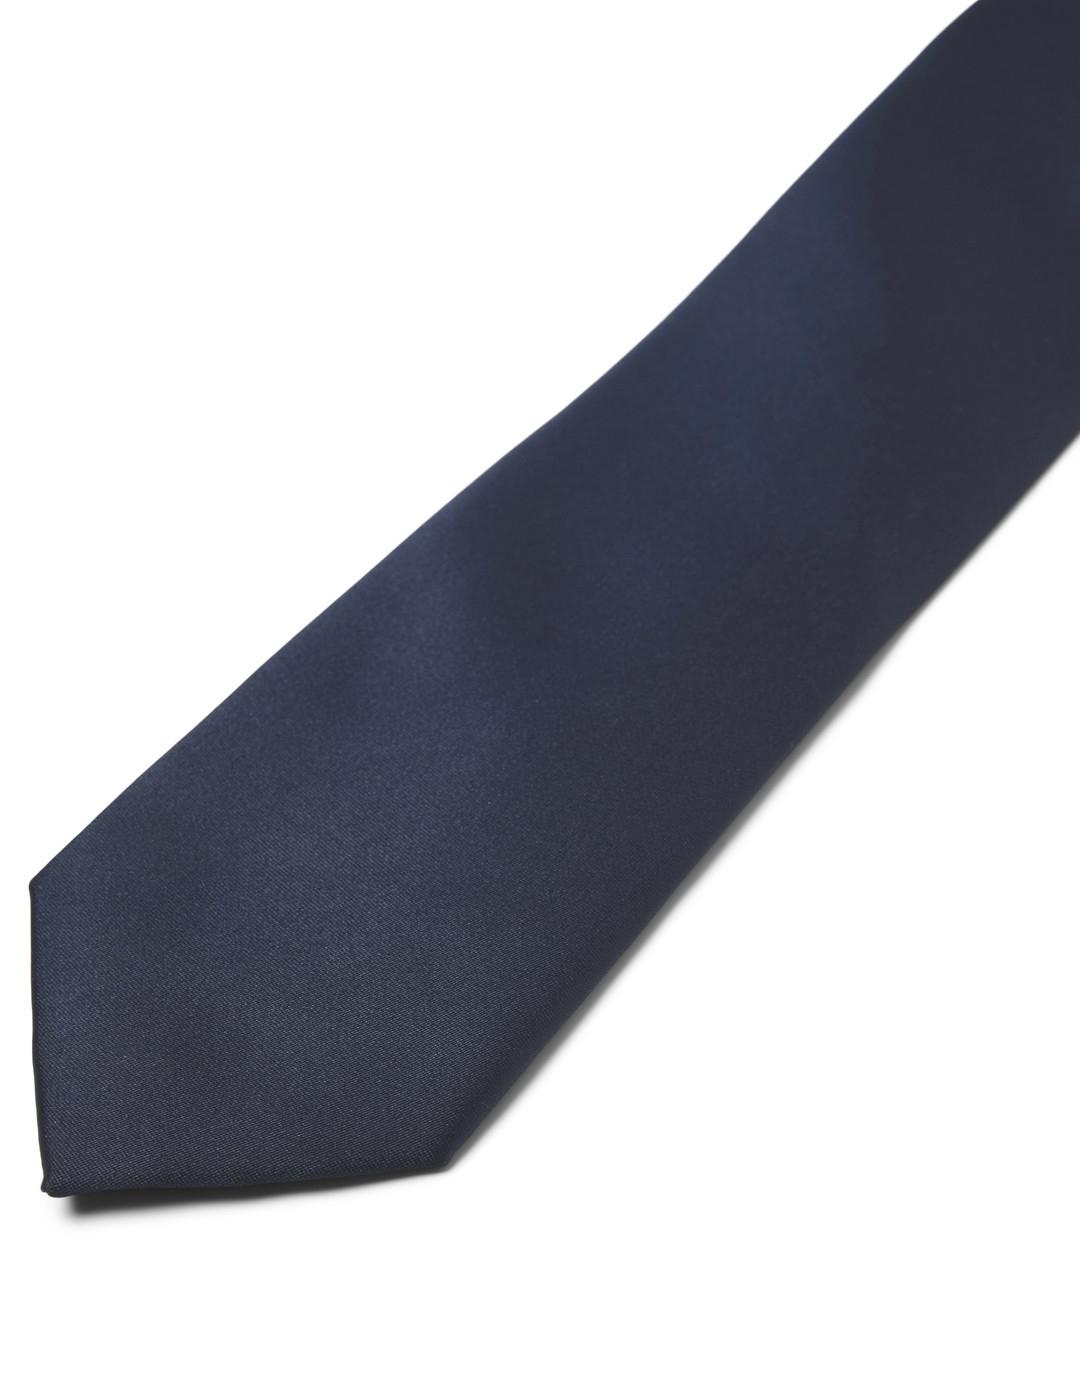 Corbata Jack&Jones Solid azul marino para hombre